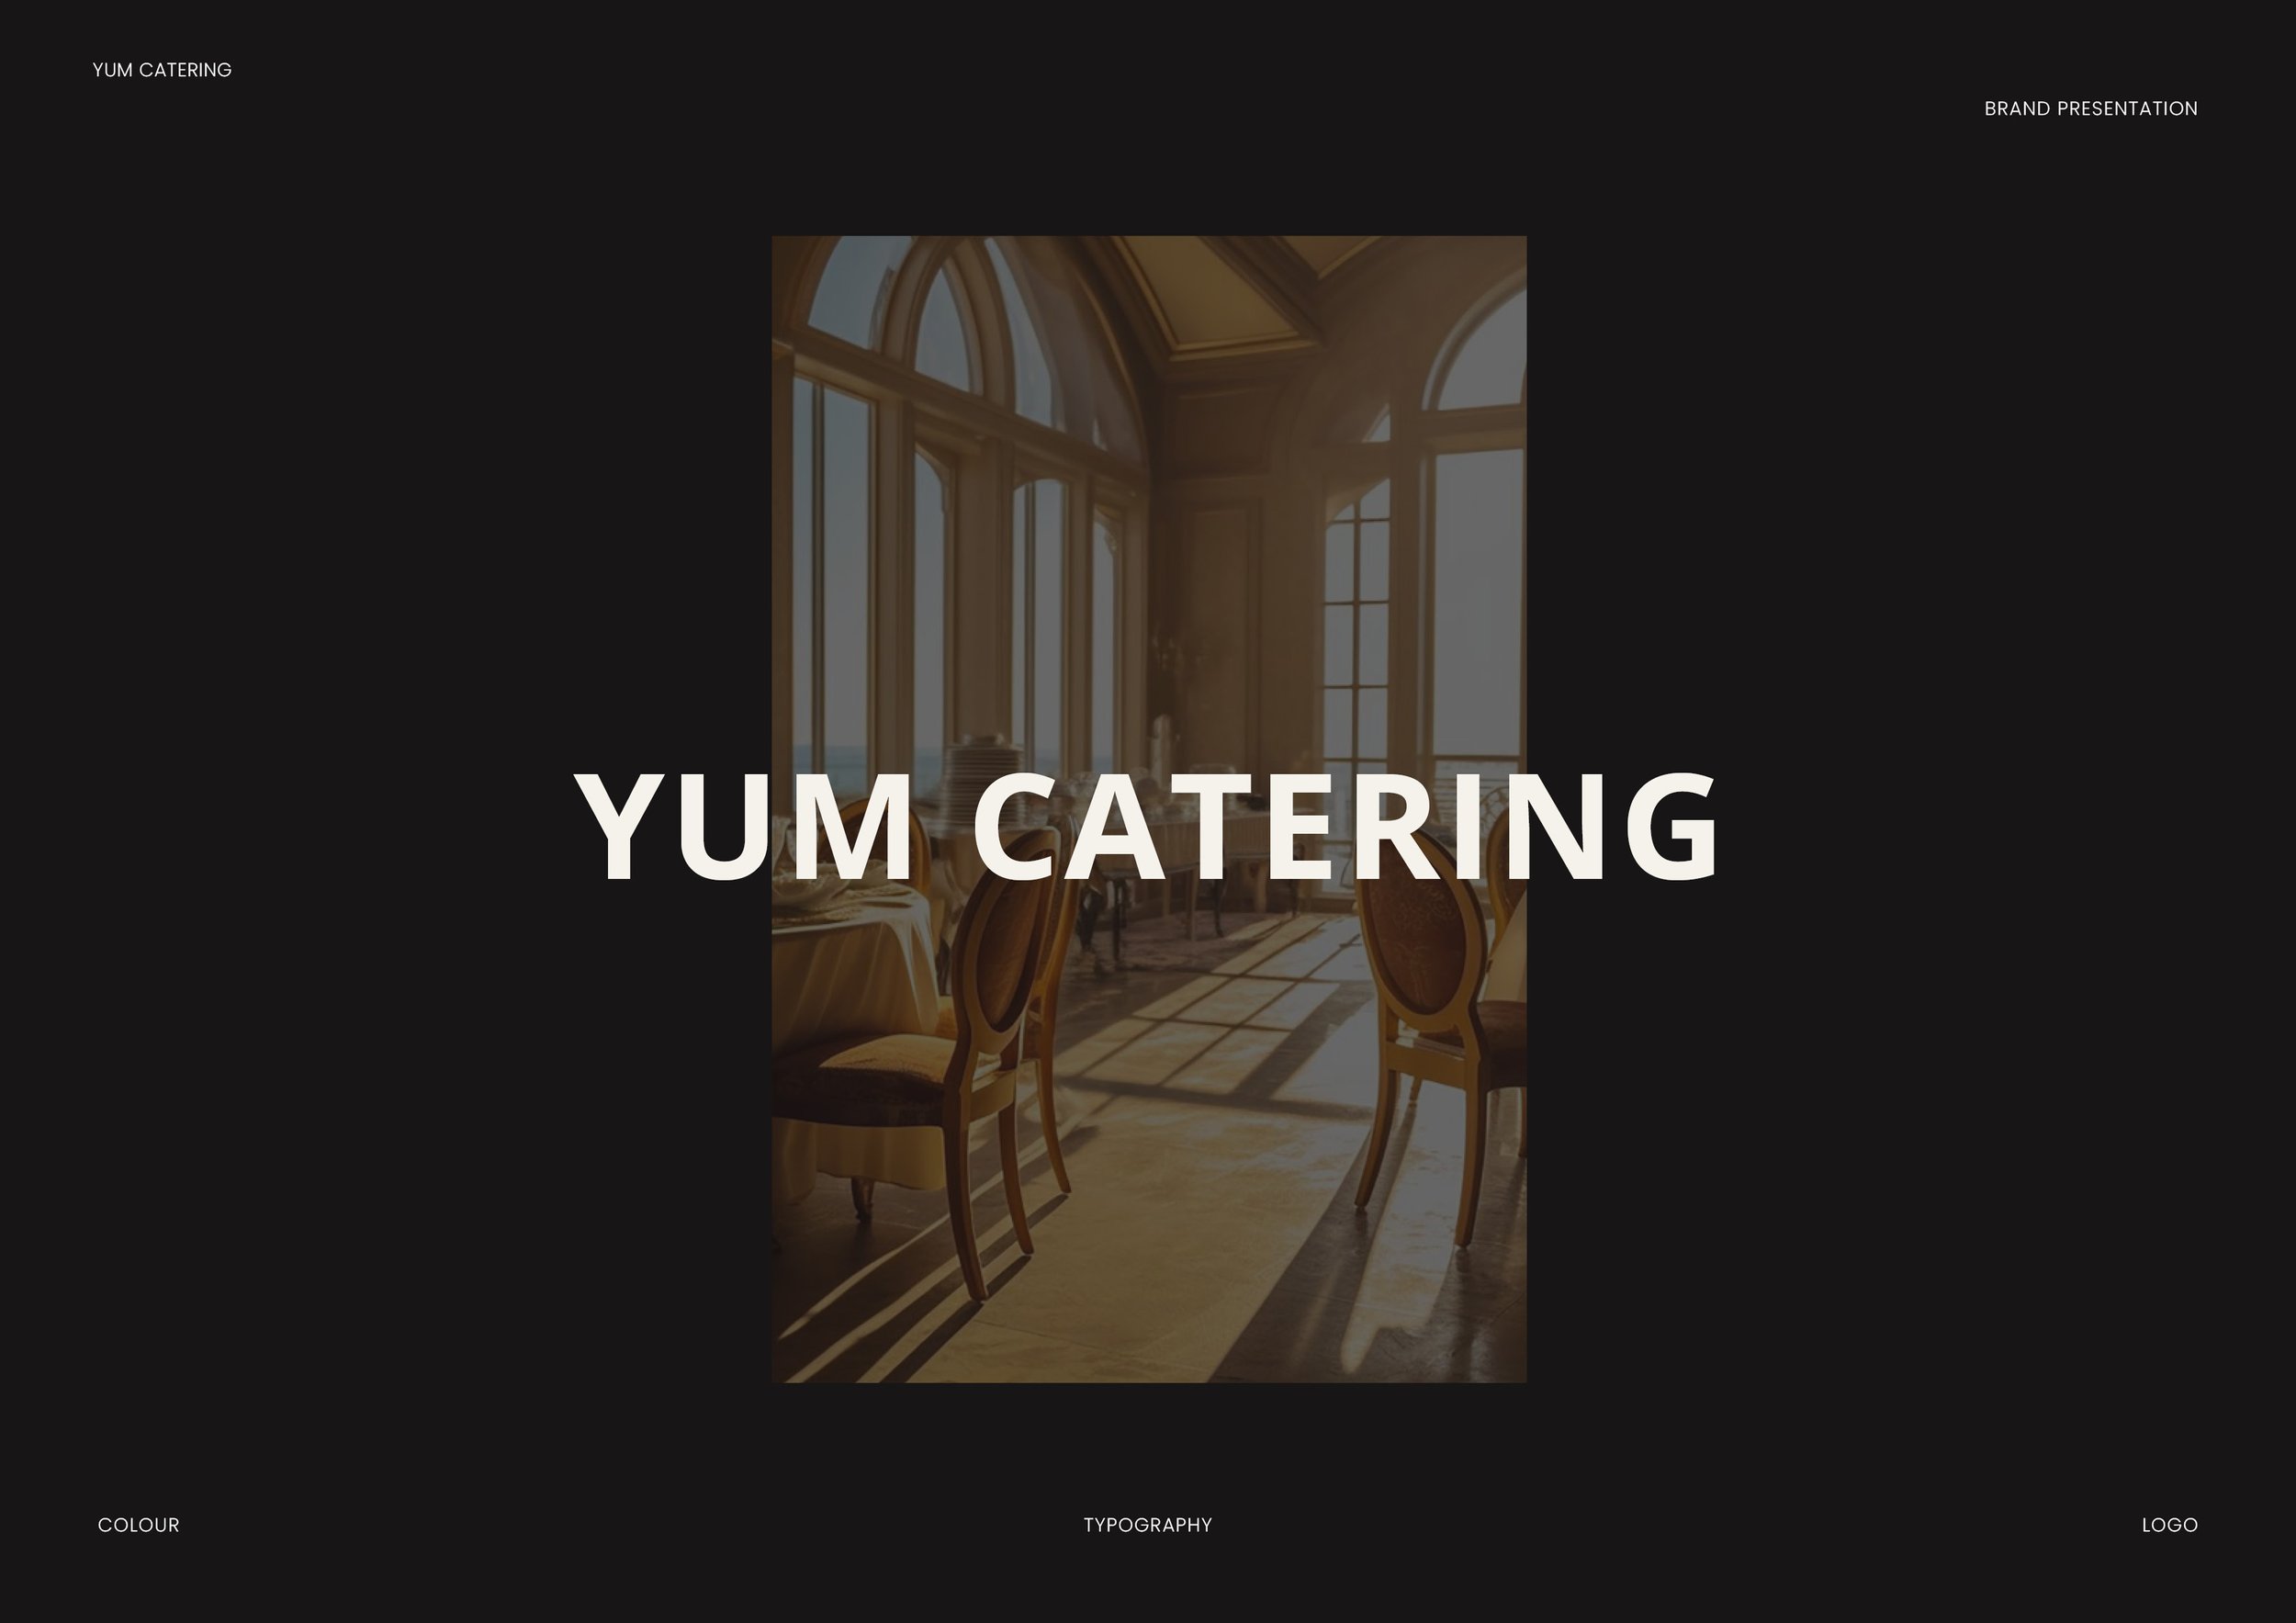 Yum Catering Brand and Logo Presentation.jpg